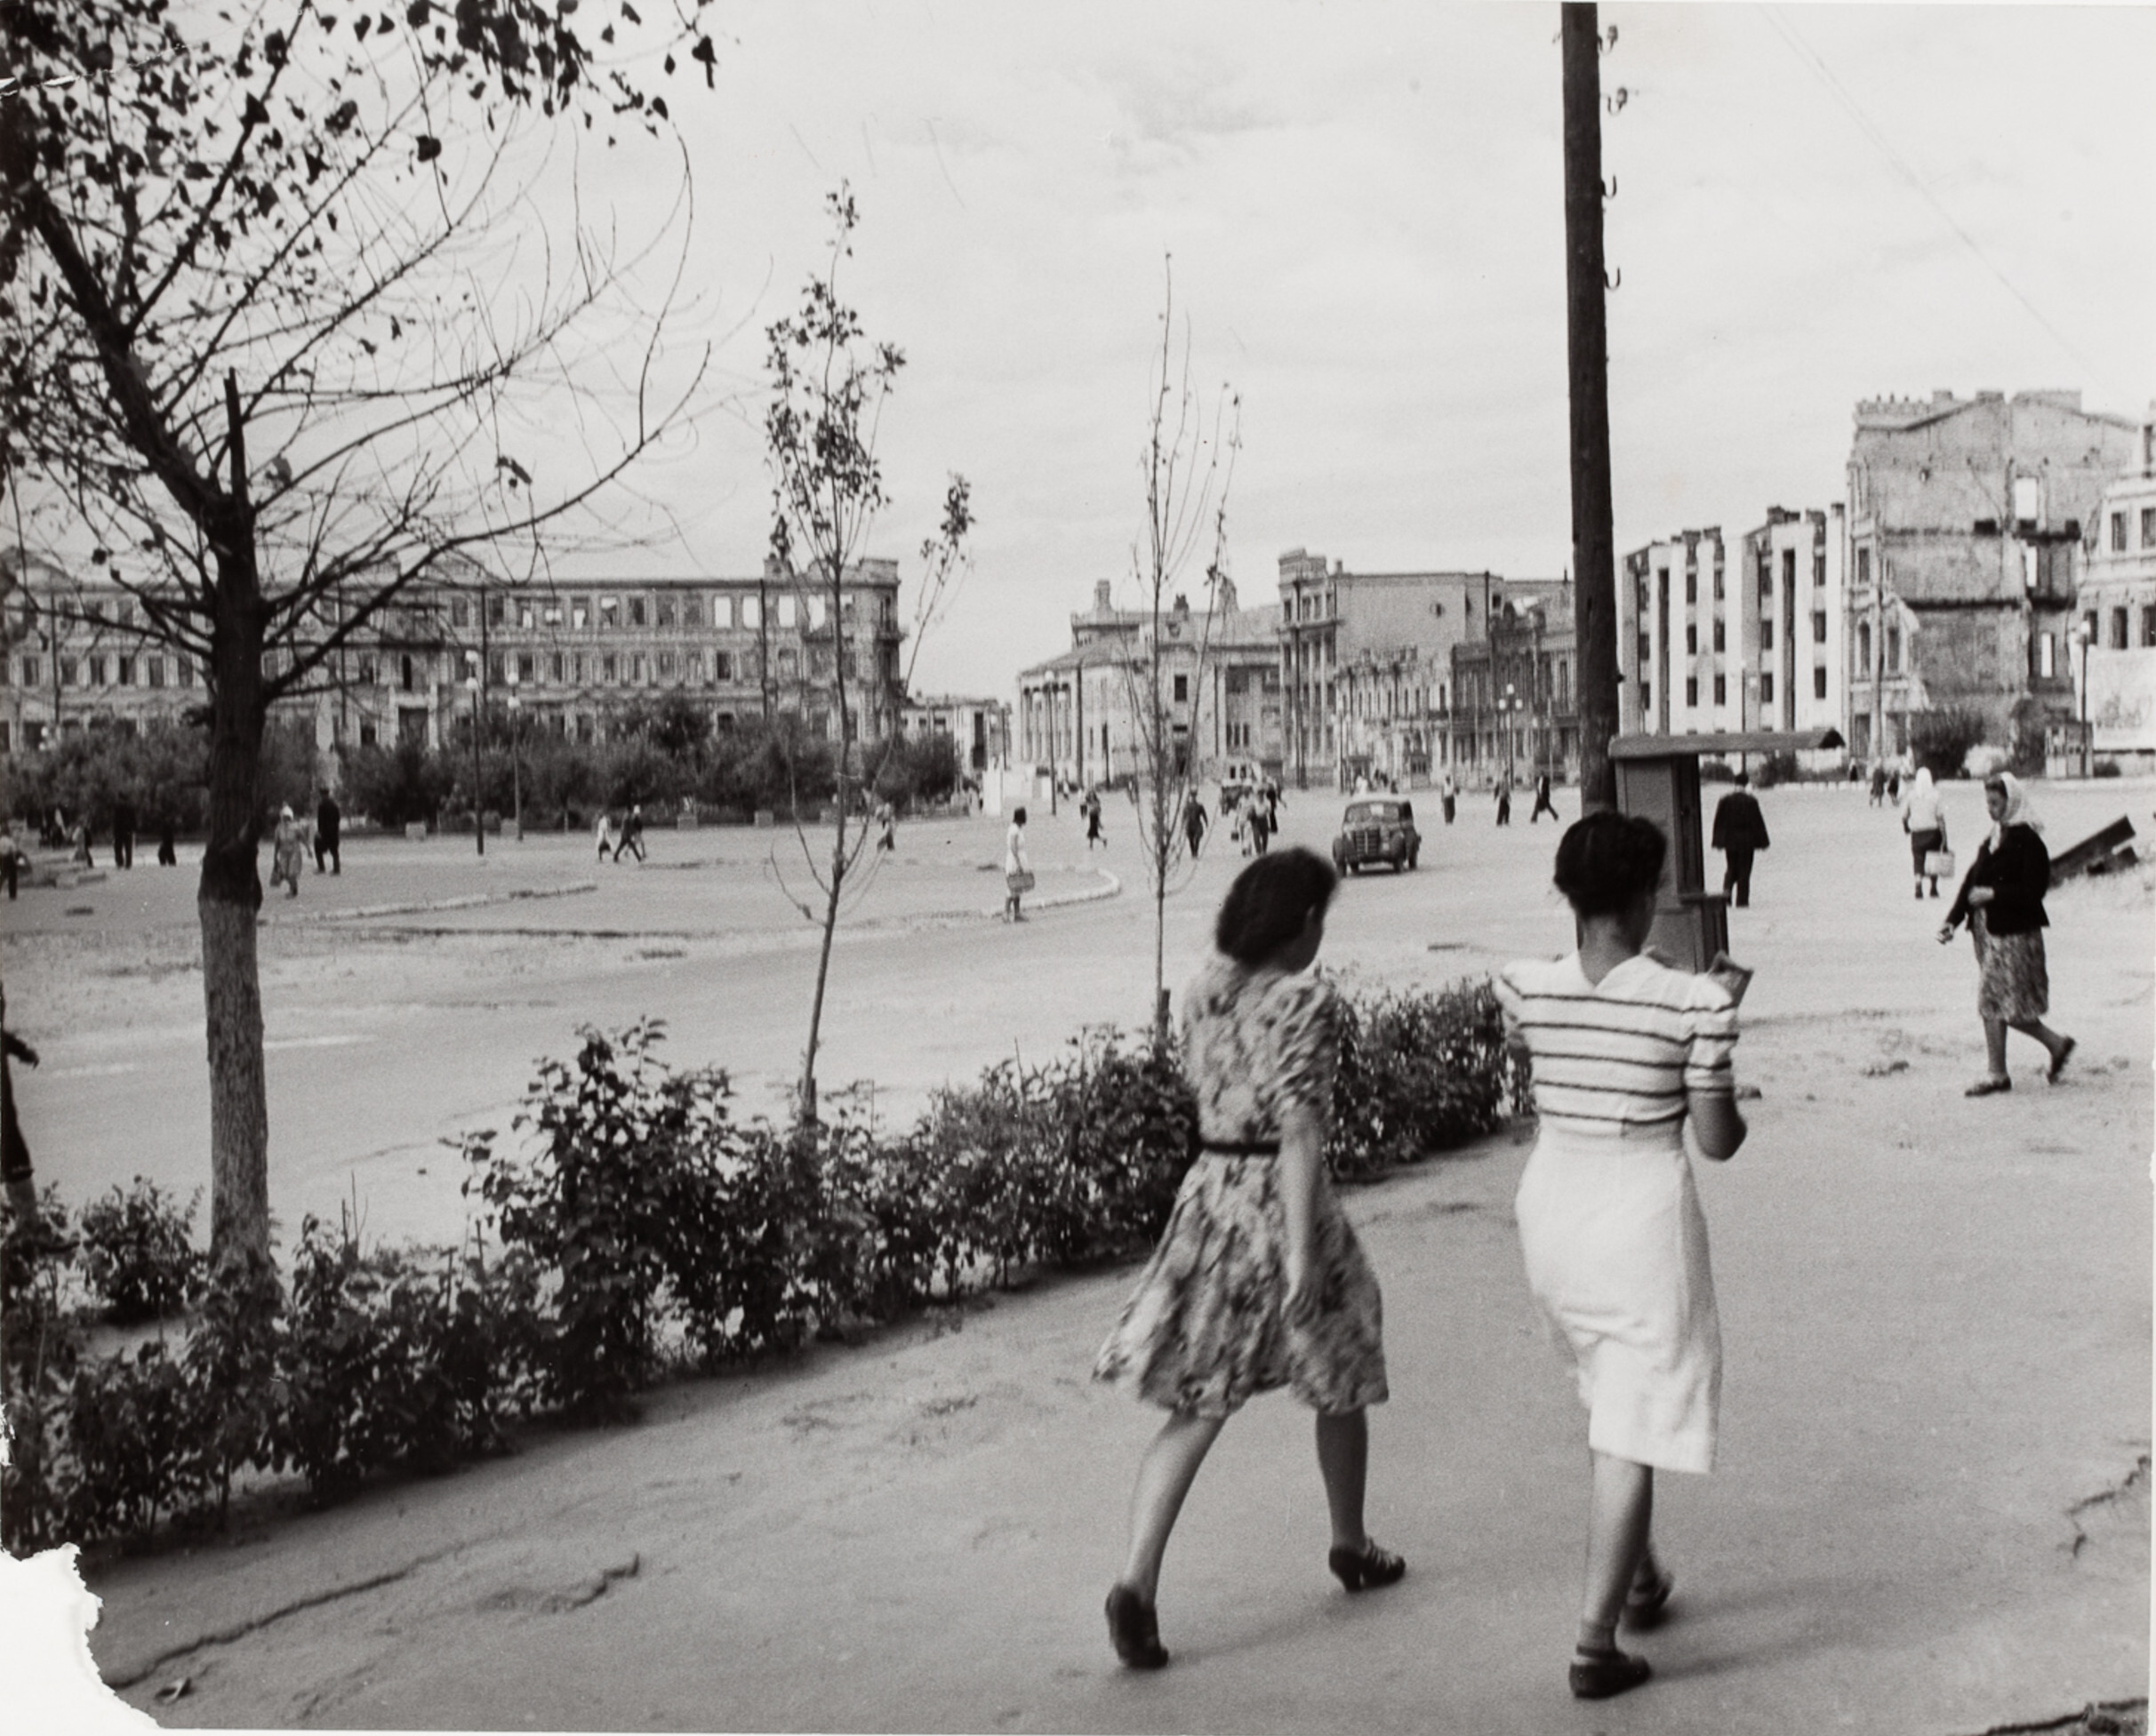 Сталинград, СССР, 1947 год. Фотограф Роберт Капа